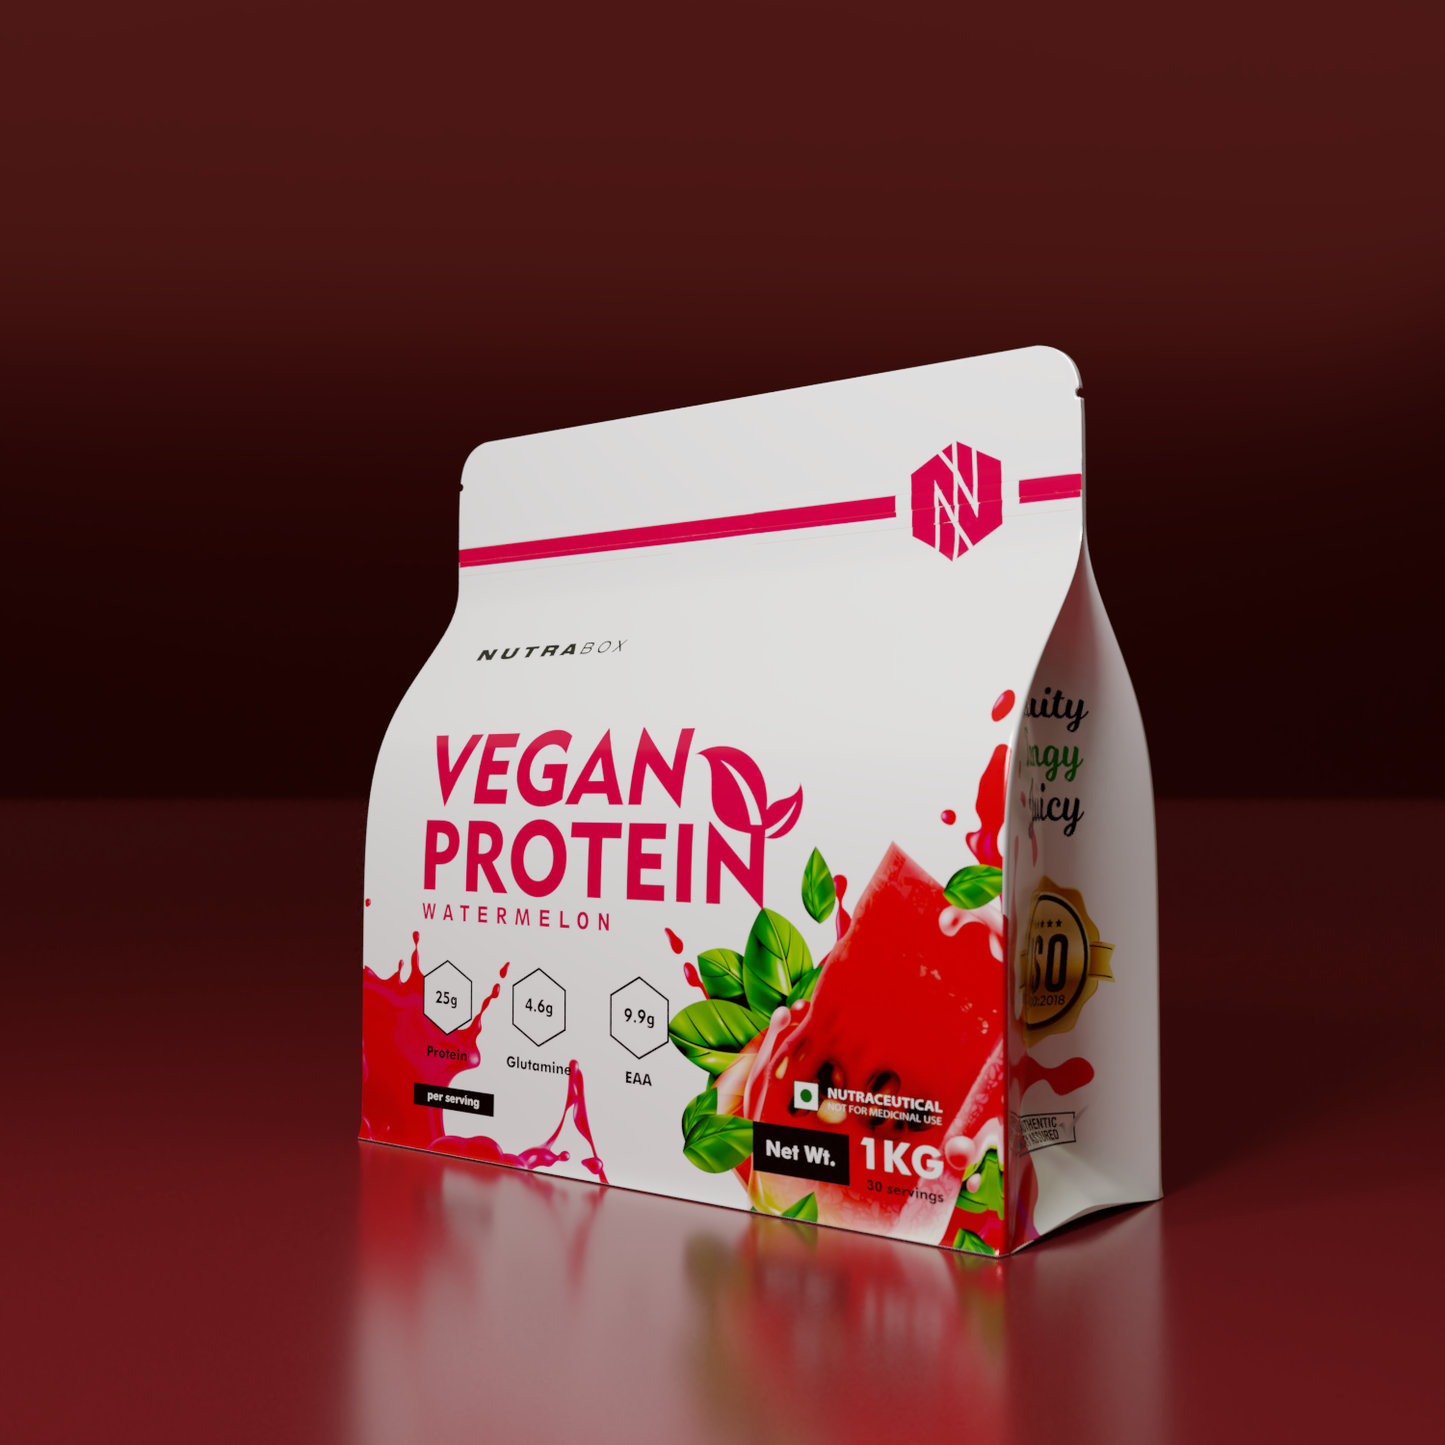 Nutrabox Vegan Protein